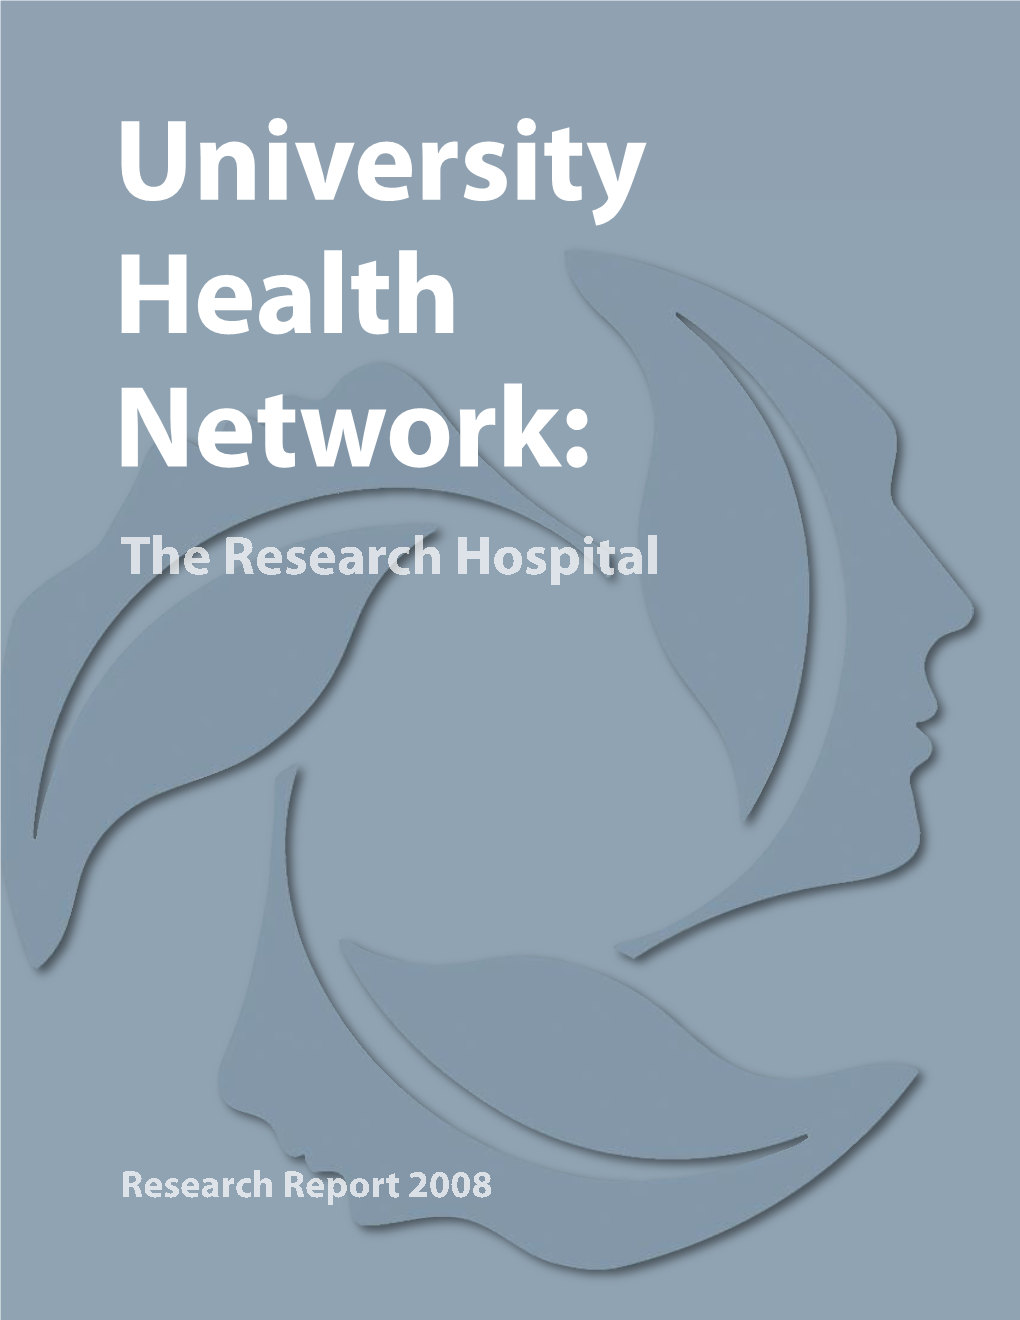 University Health Network: Runiverseity Hesalth Neetworak: Therrescearchhhospital Report